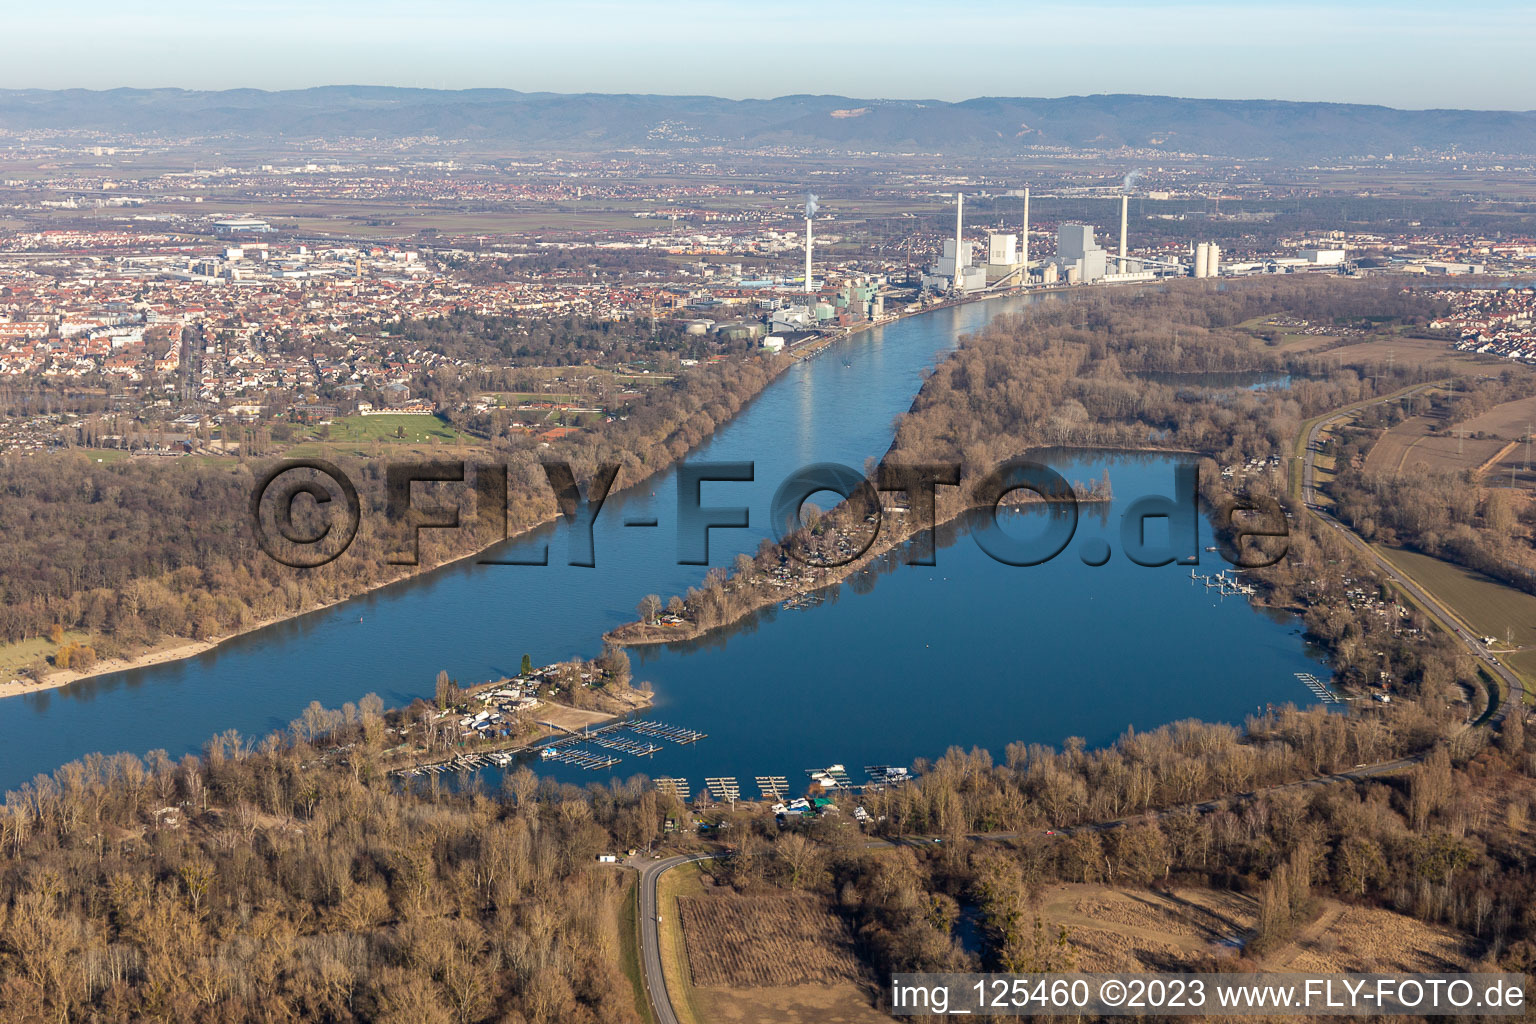 Aerial view of Pine pond in the district Rheingönheim in Ludwigshafen am Rhein in the state Rhineland-Palatinate, Germany